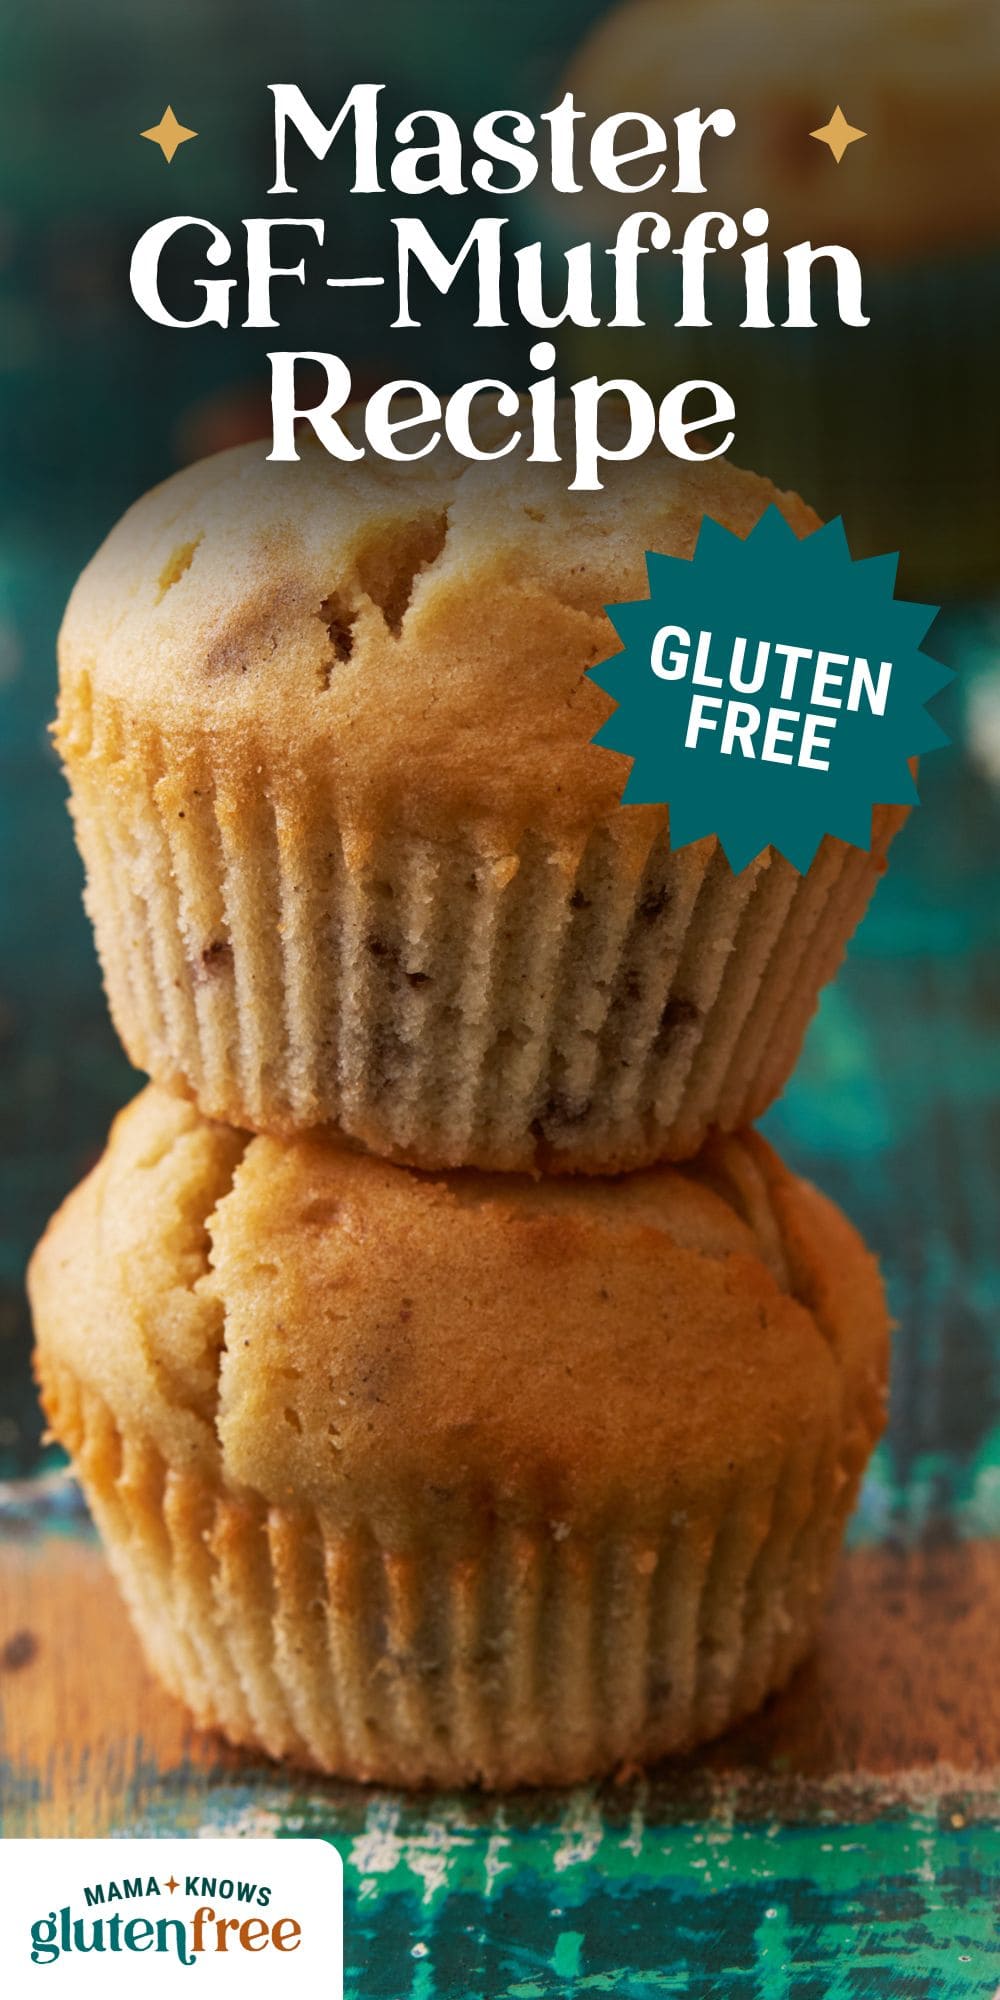 gluten free muffins pin